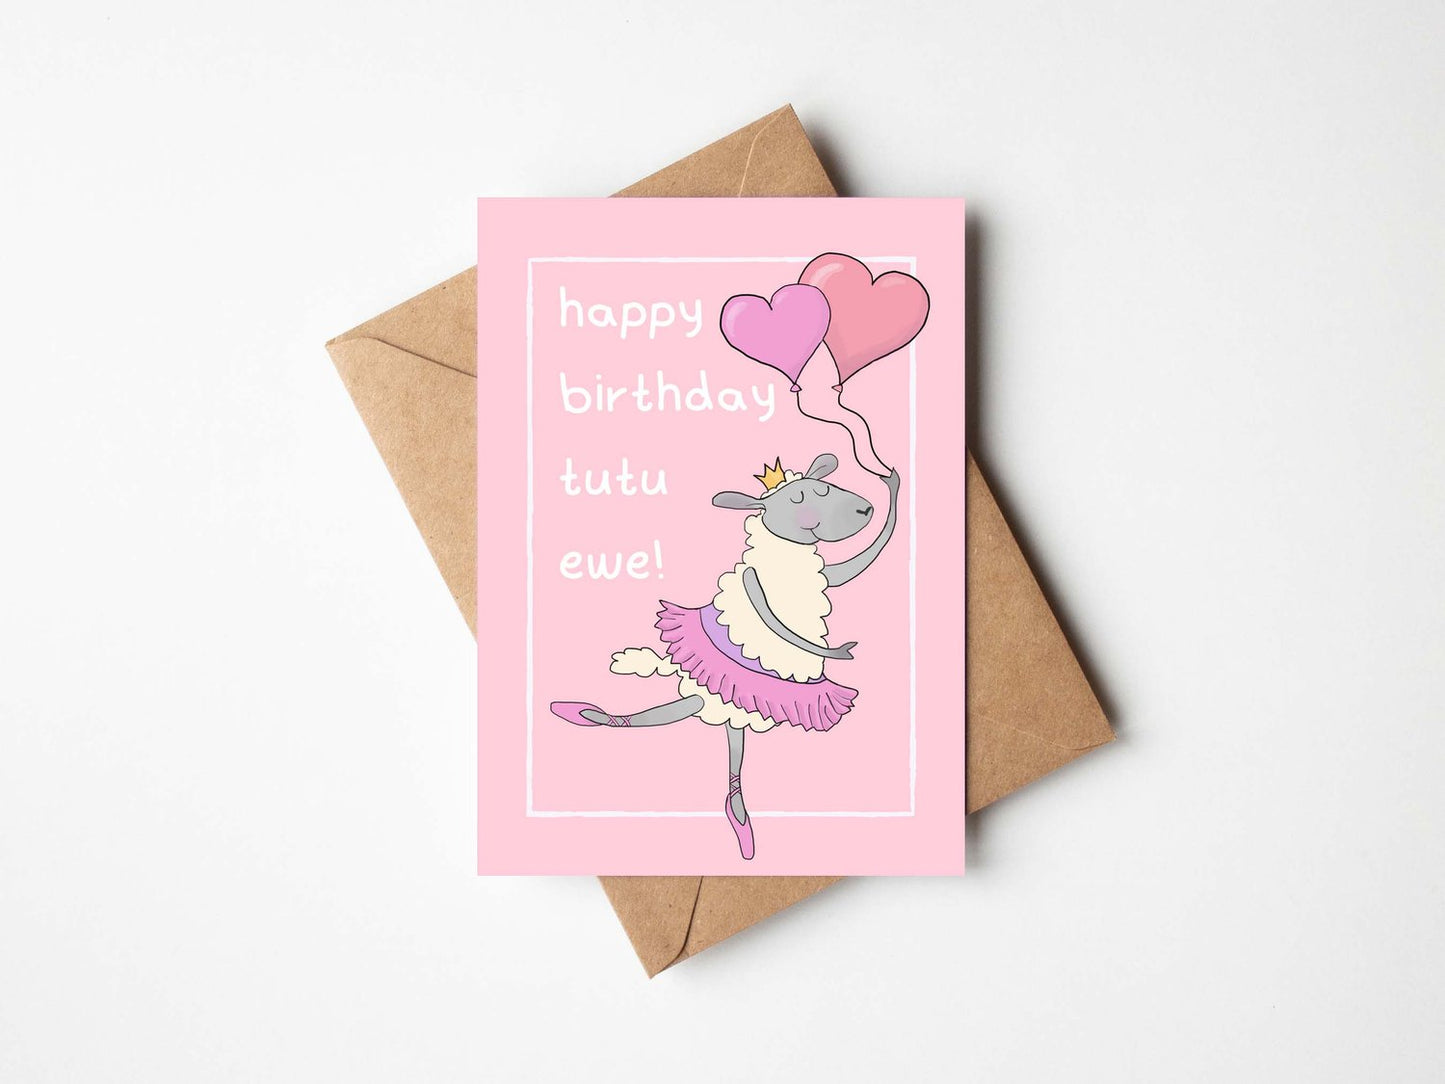 Happy Birthday Tutu Ewe - Greetings Card